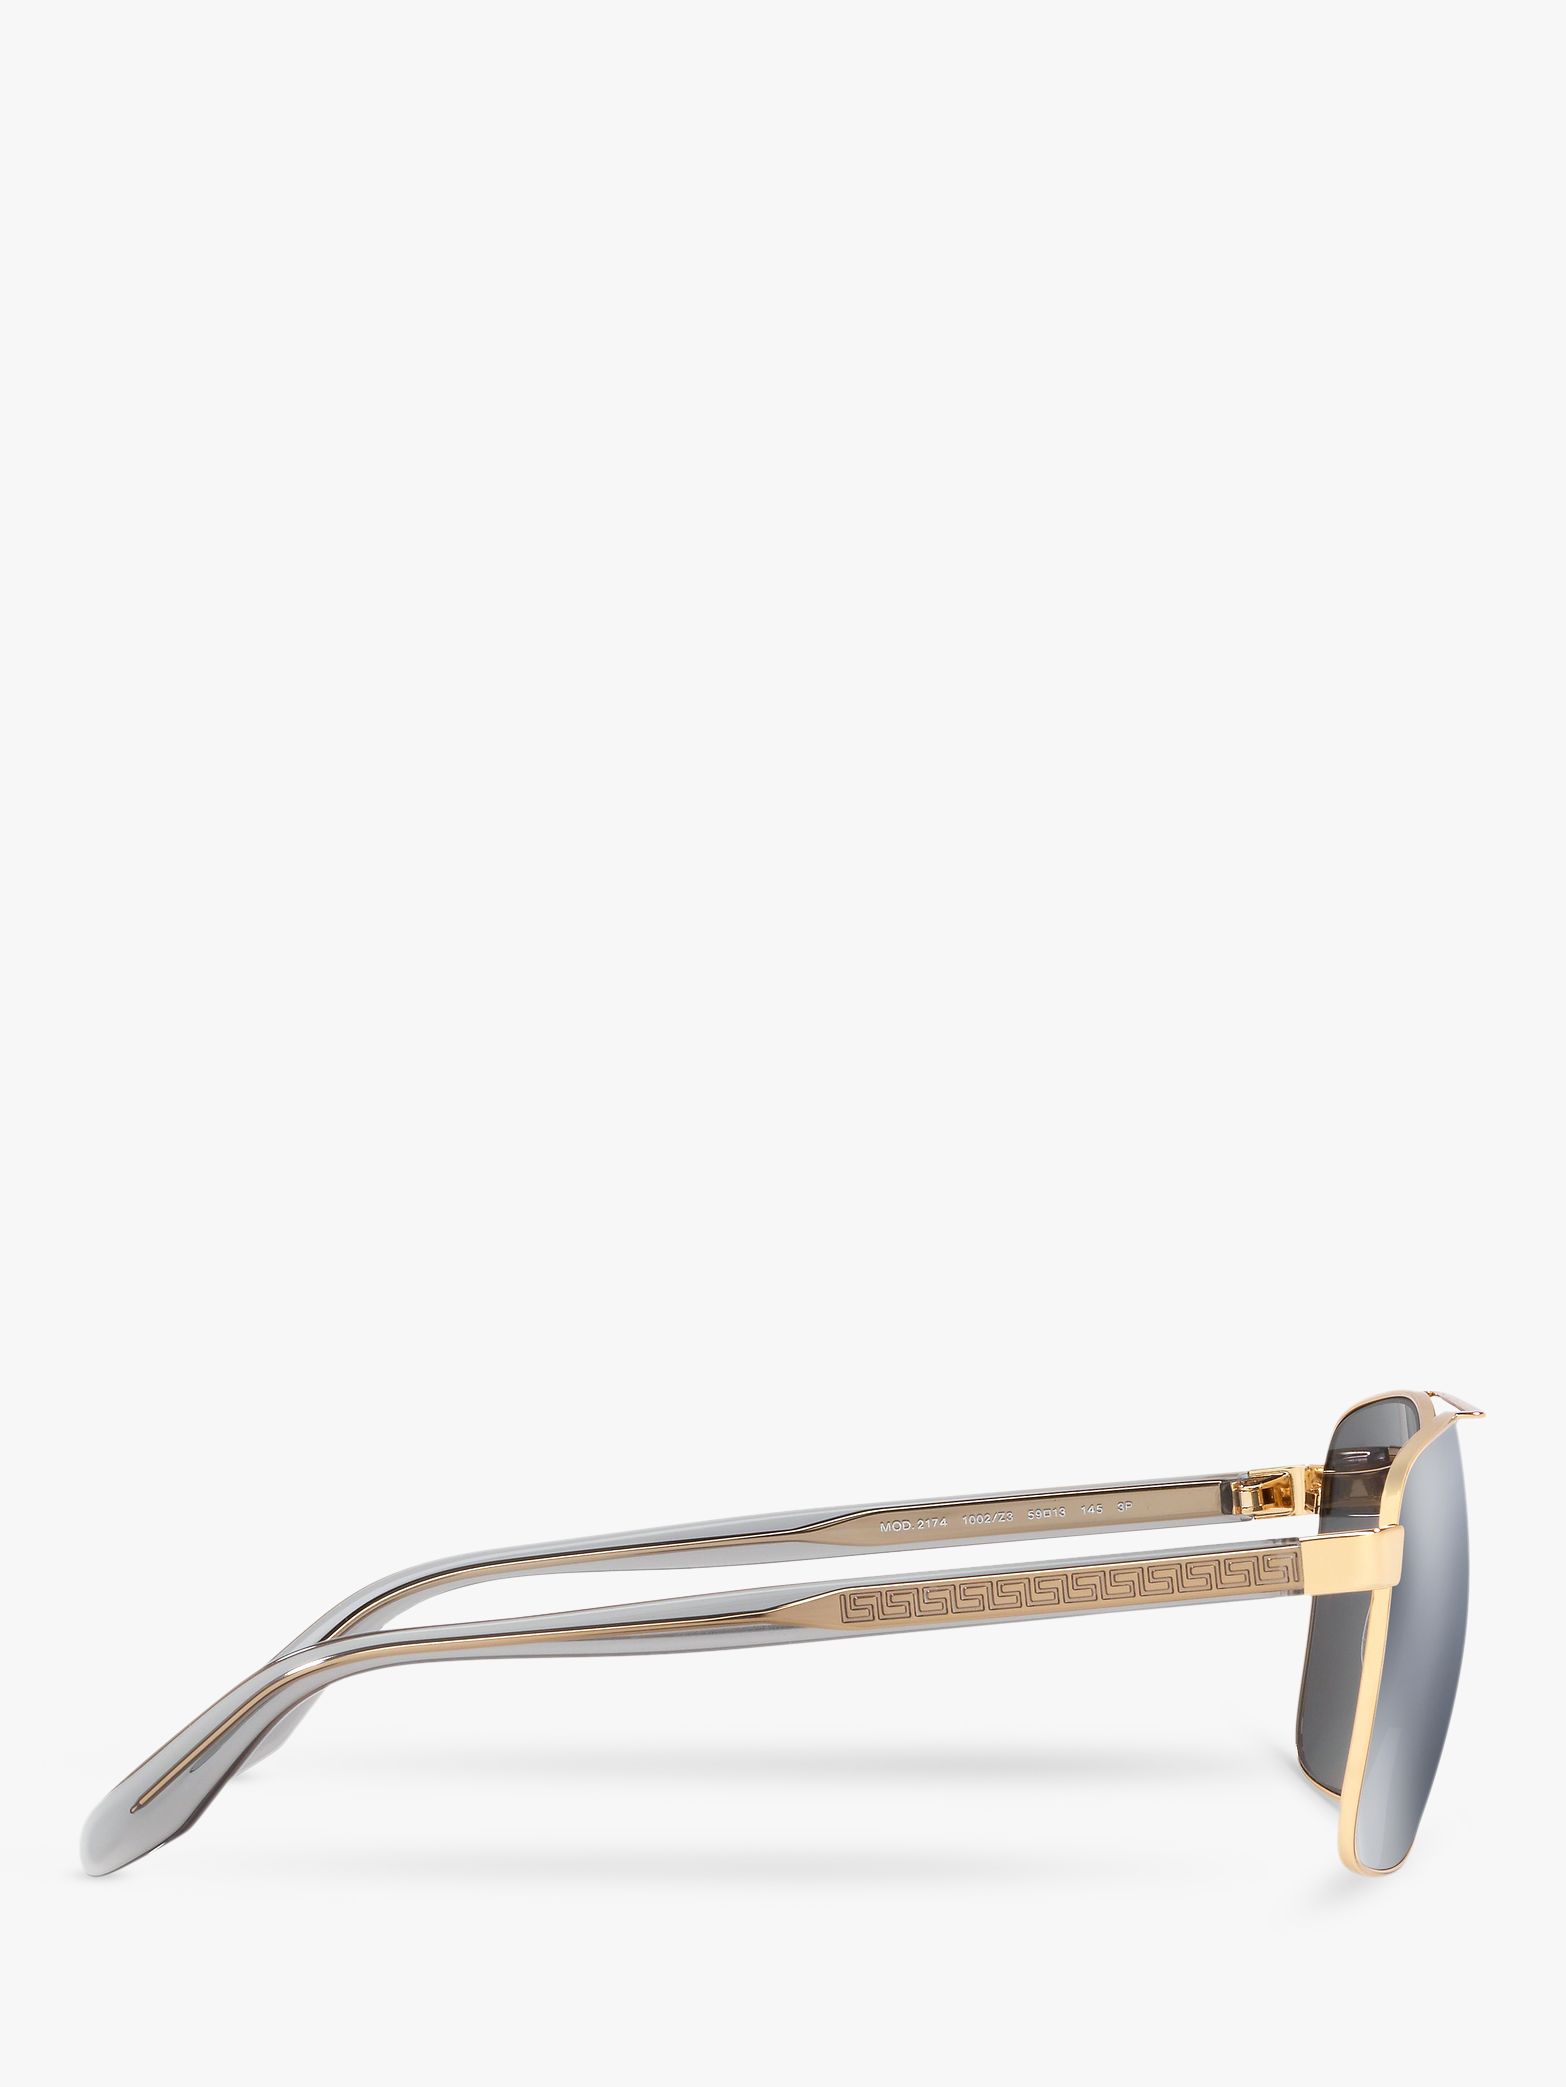 Buy Versace VE2174 Men's Polarised Square Sunglasses, Gold/Mirror Grey Online at johnlewis.com